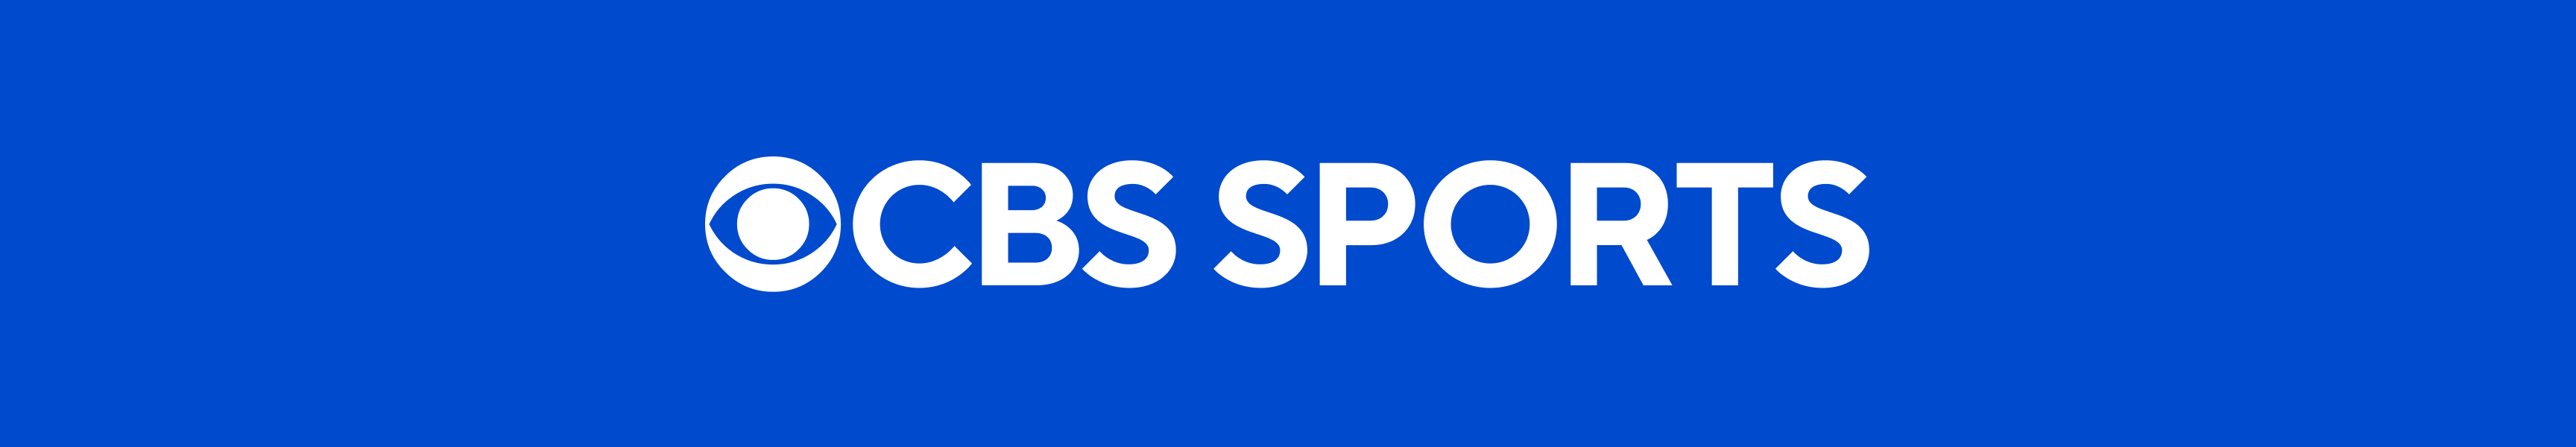 Ropa deportiva CBS